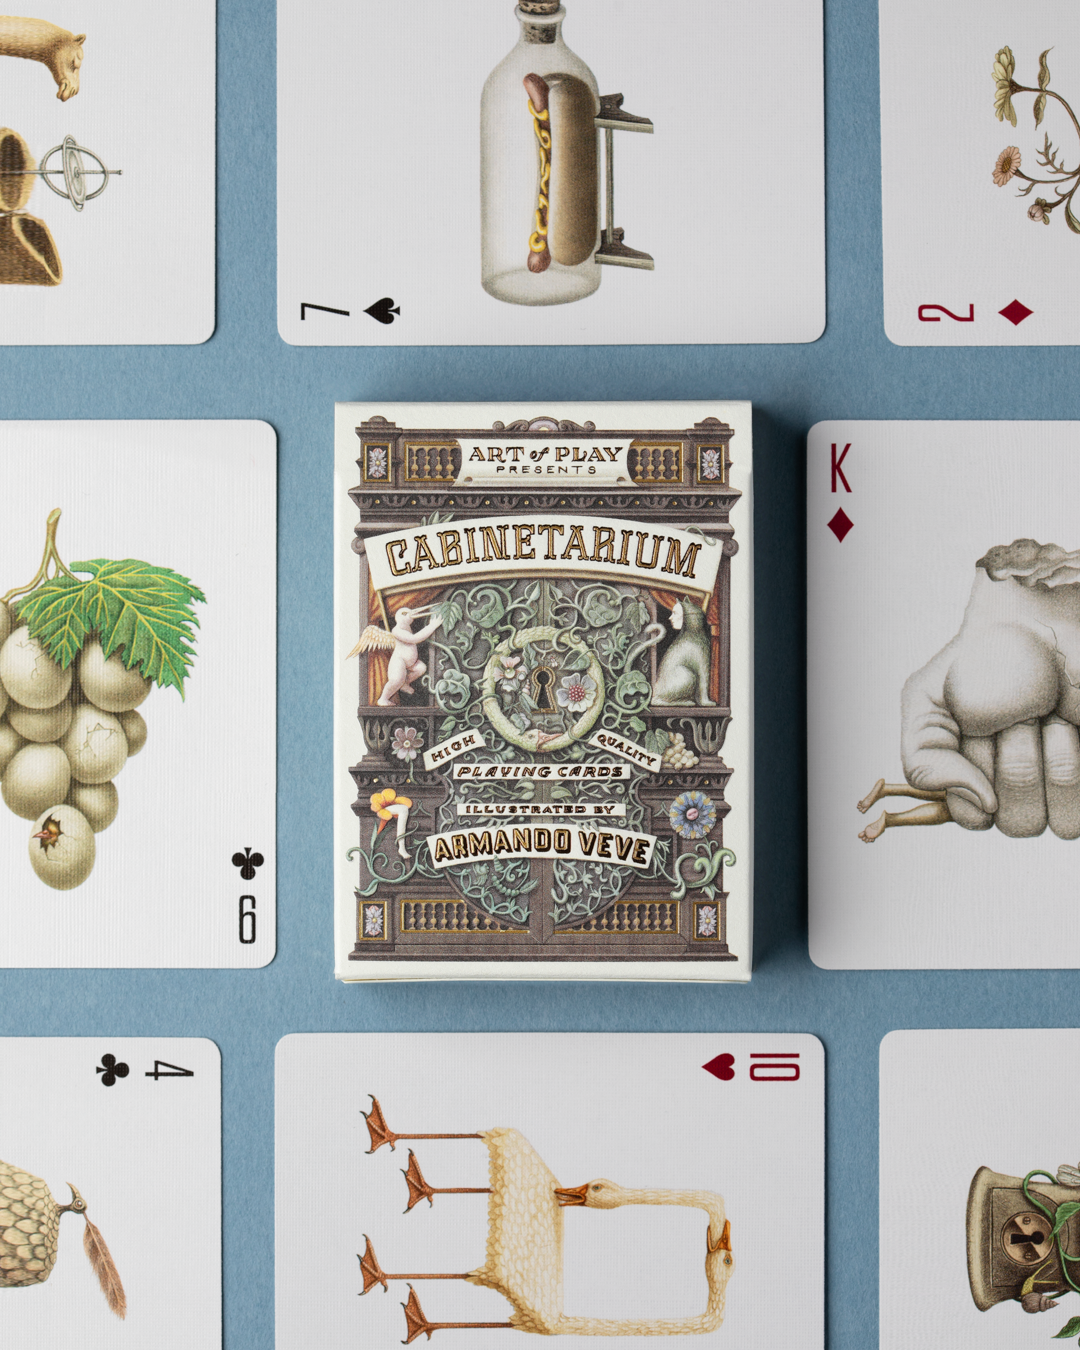 art of play : cabinetarium playing cards